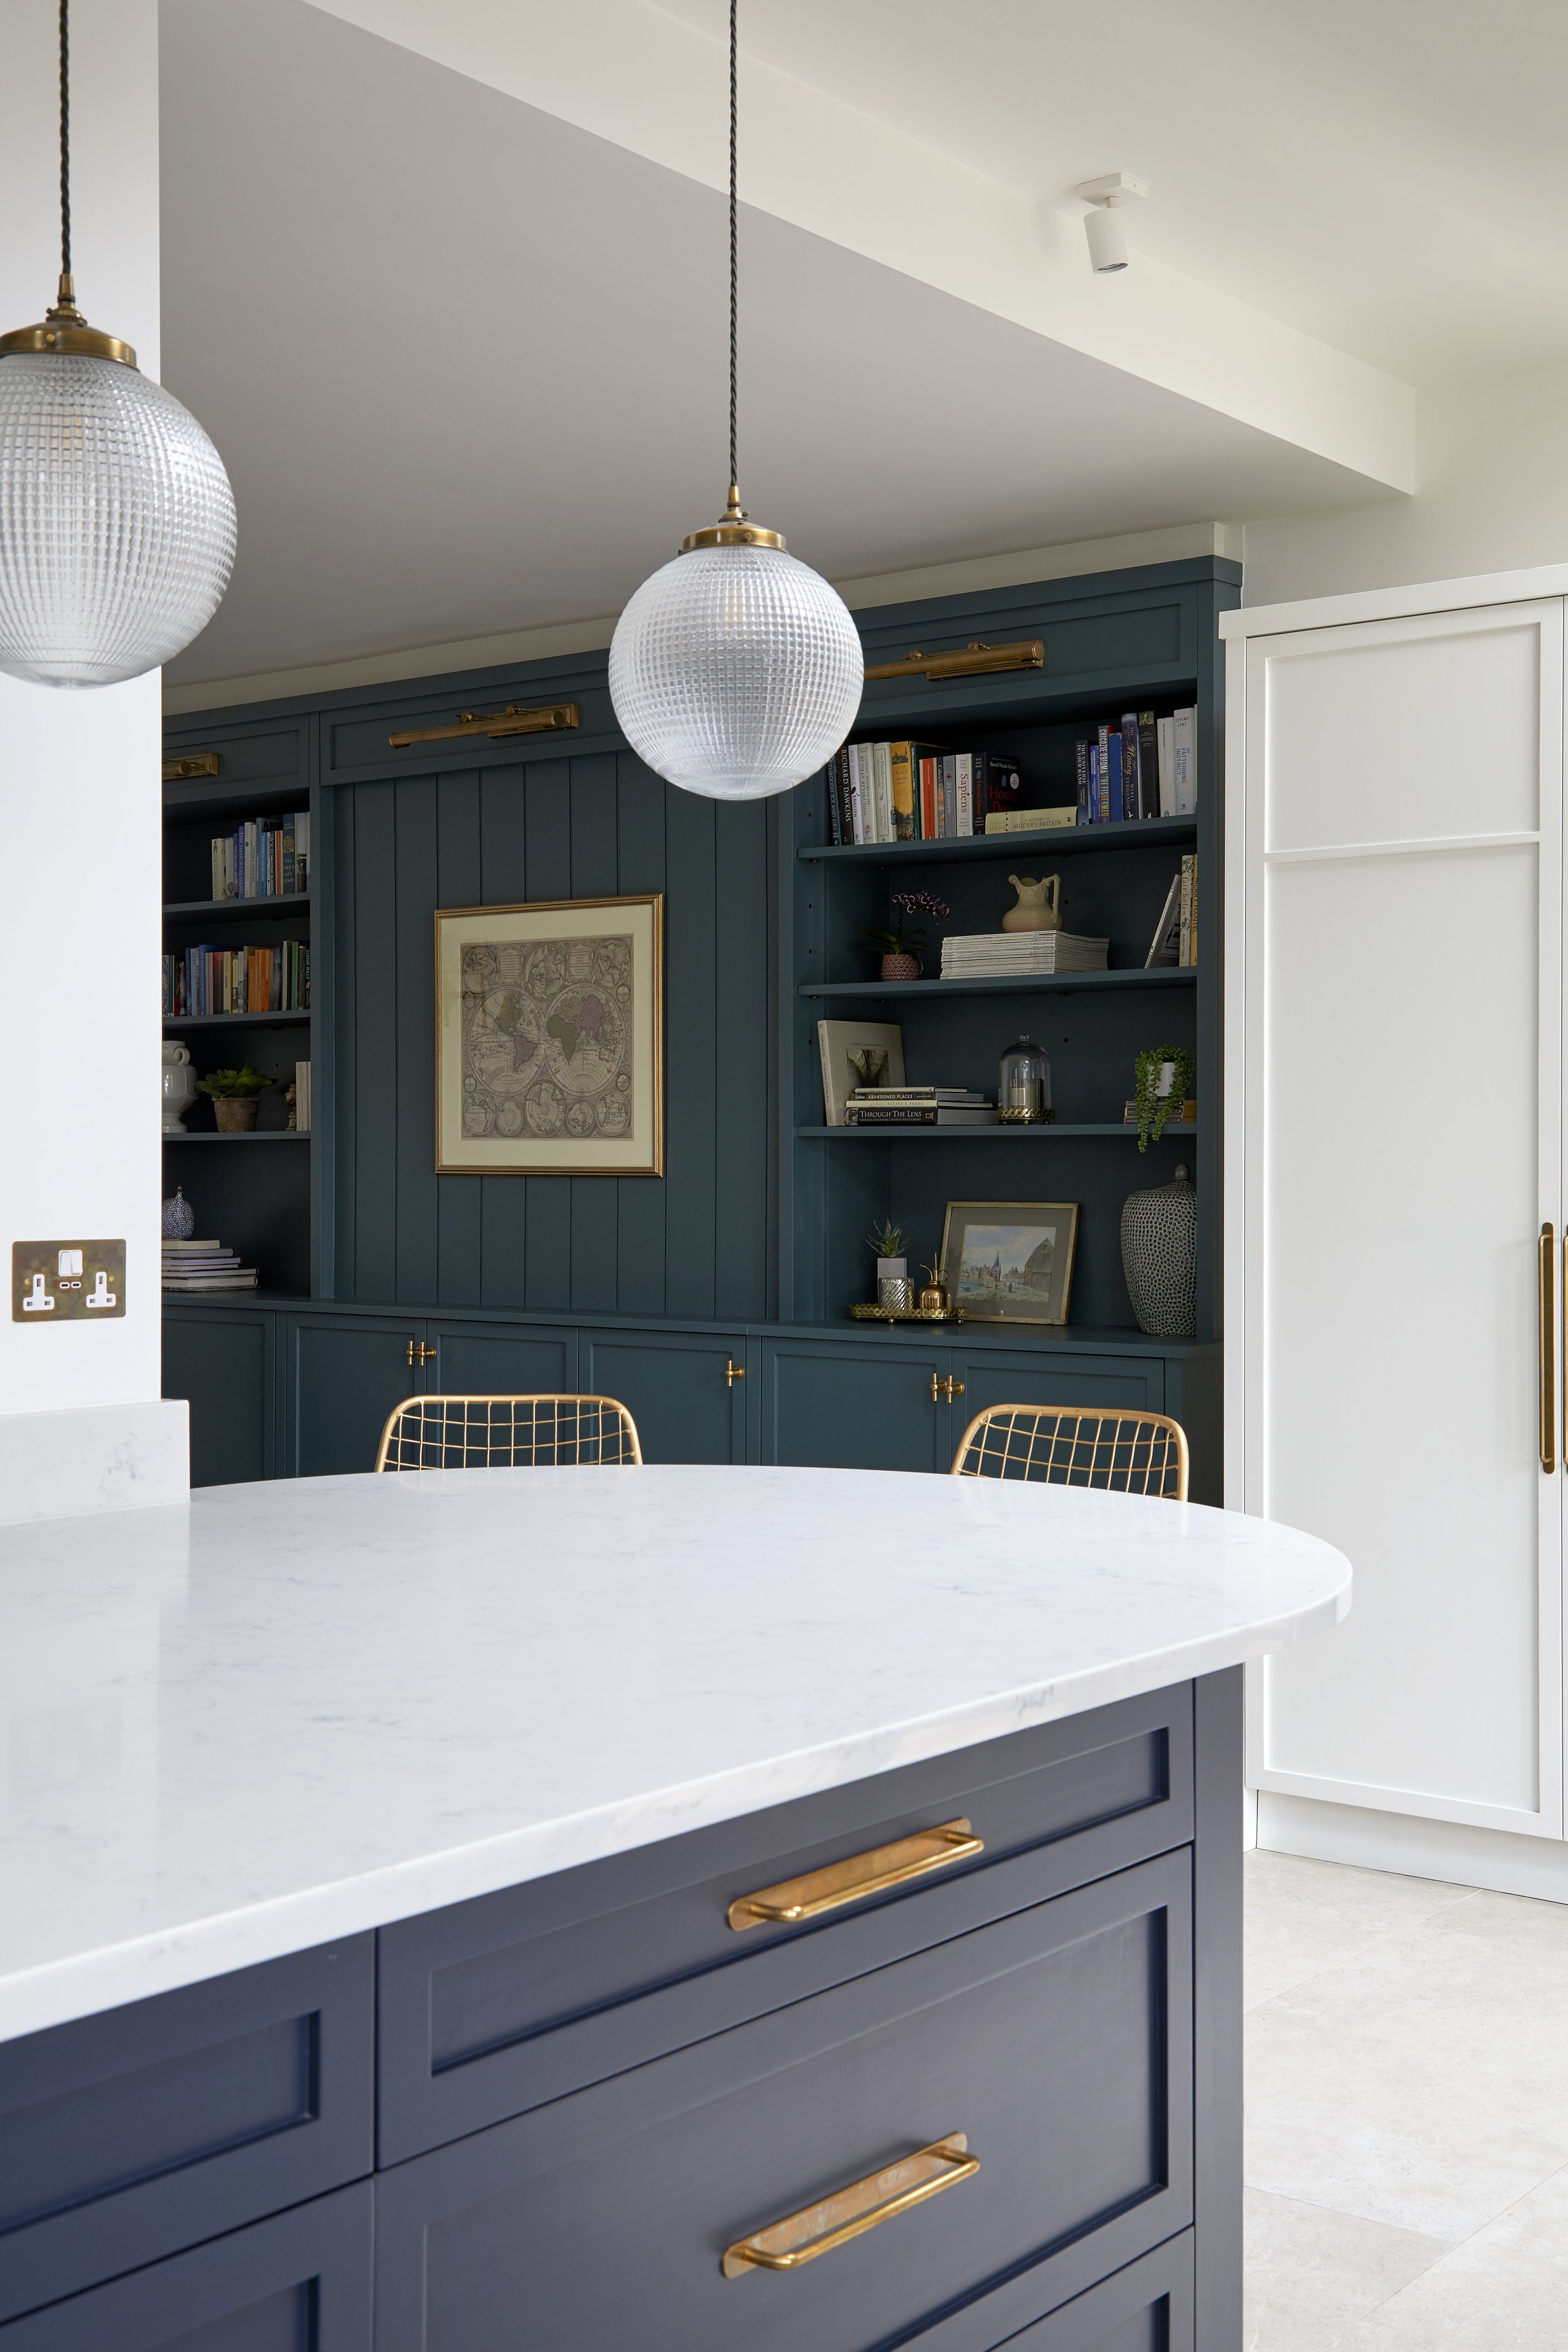 Alison Anderson Interiors kitchen island design.jpg